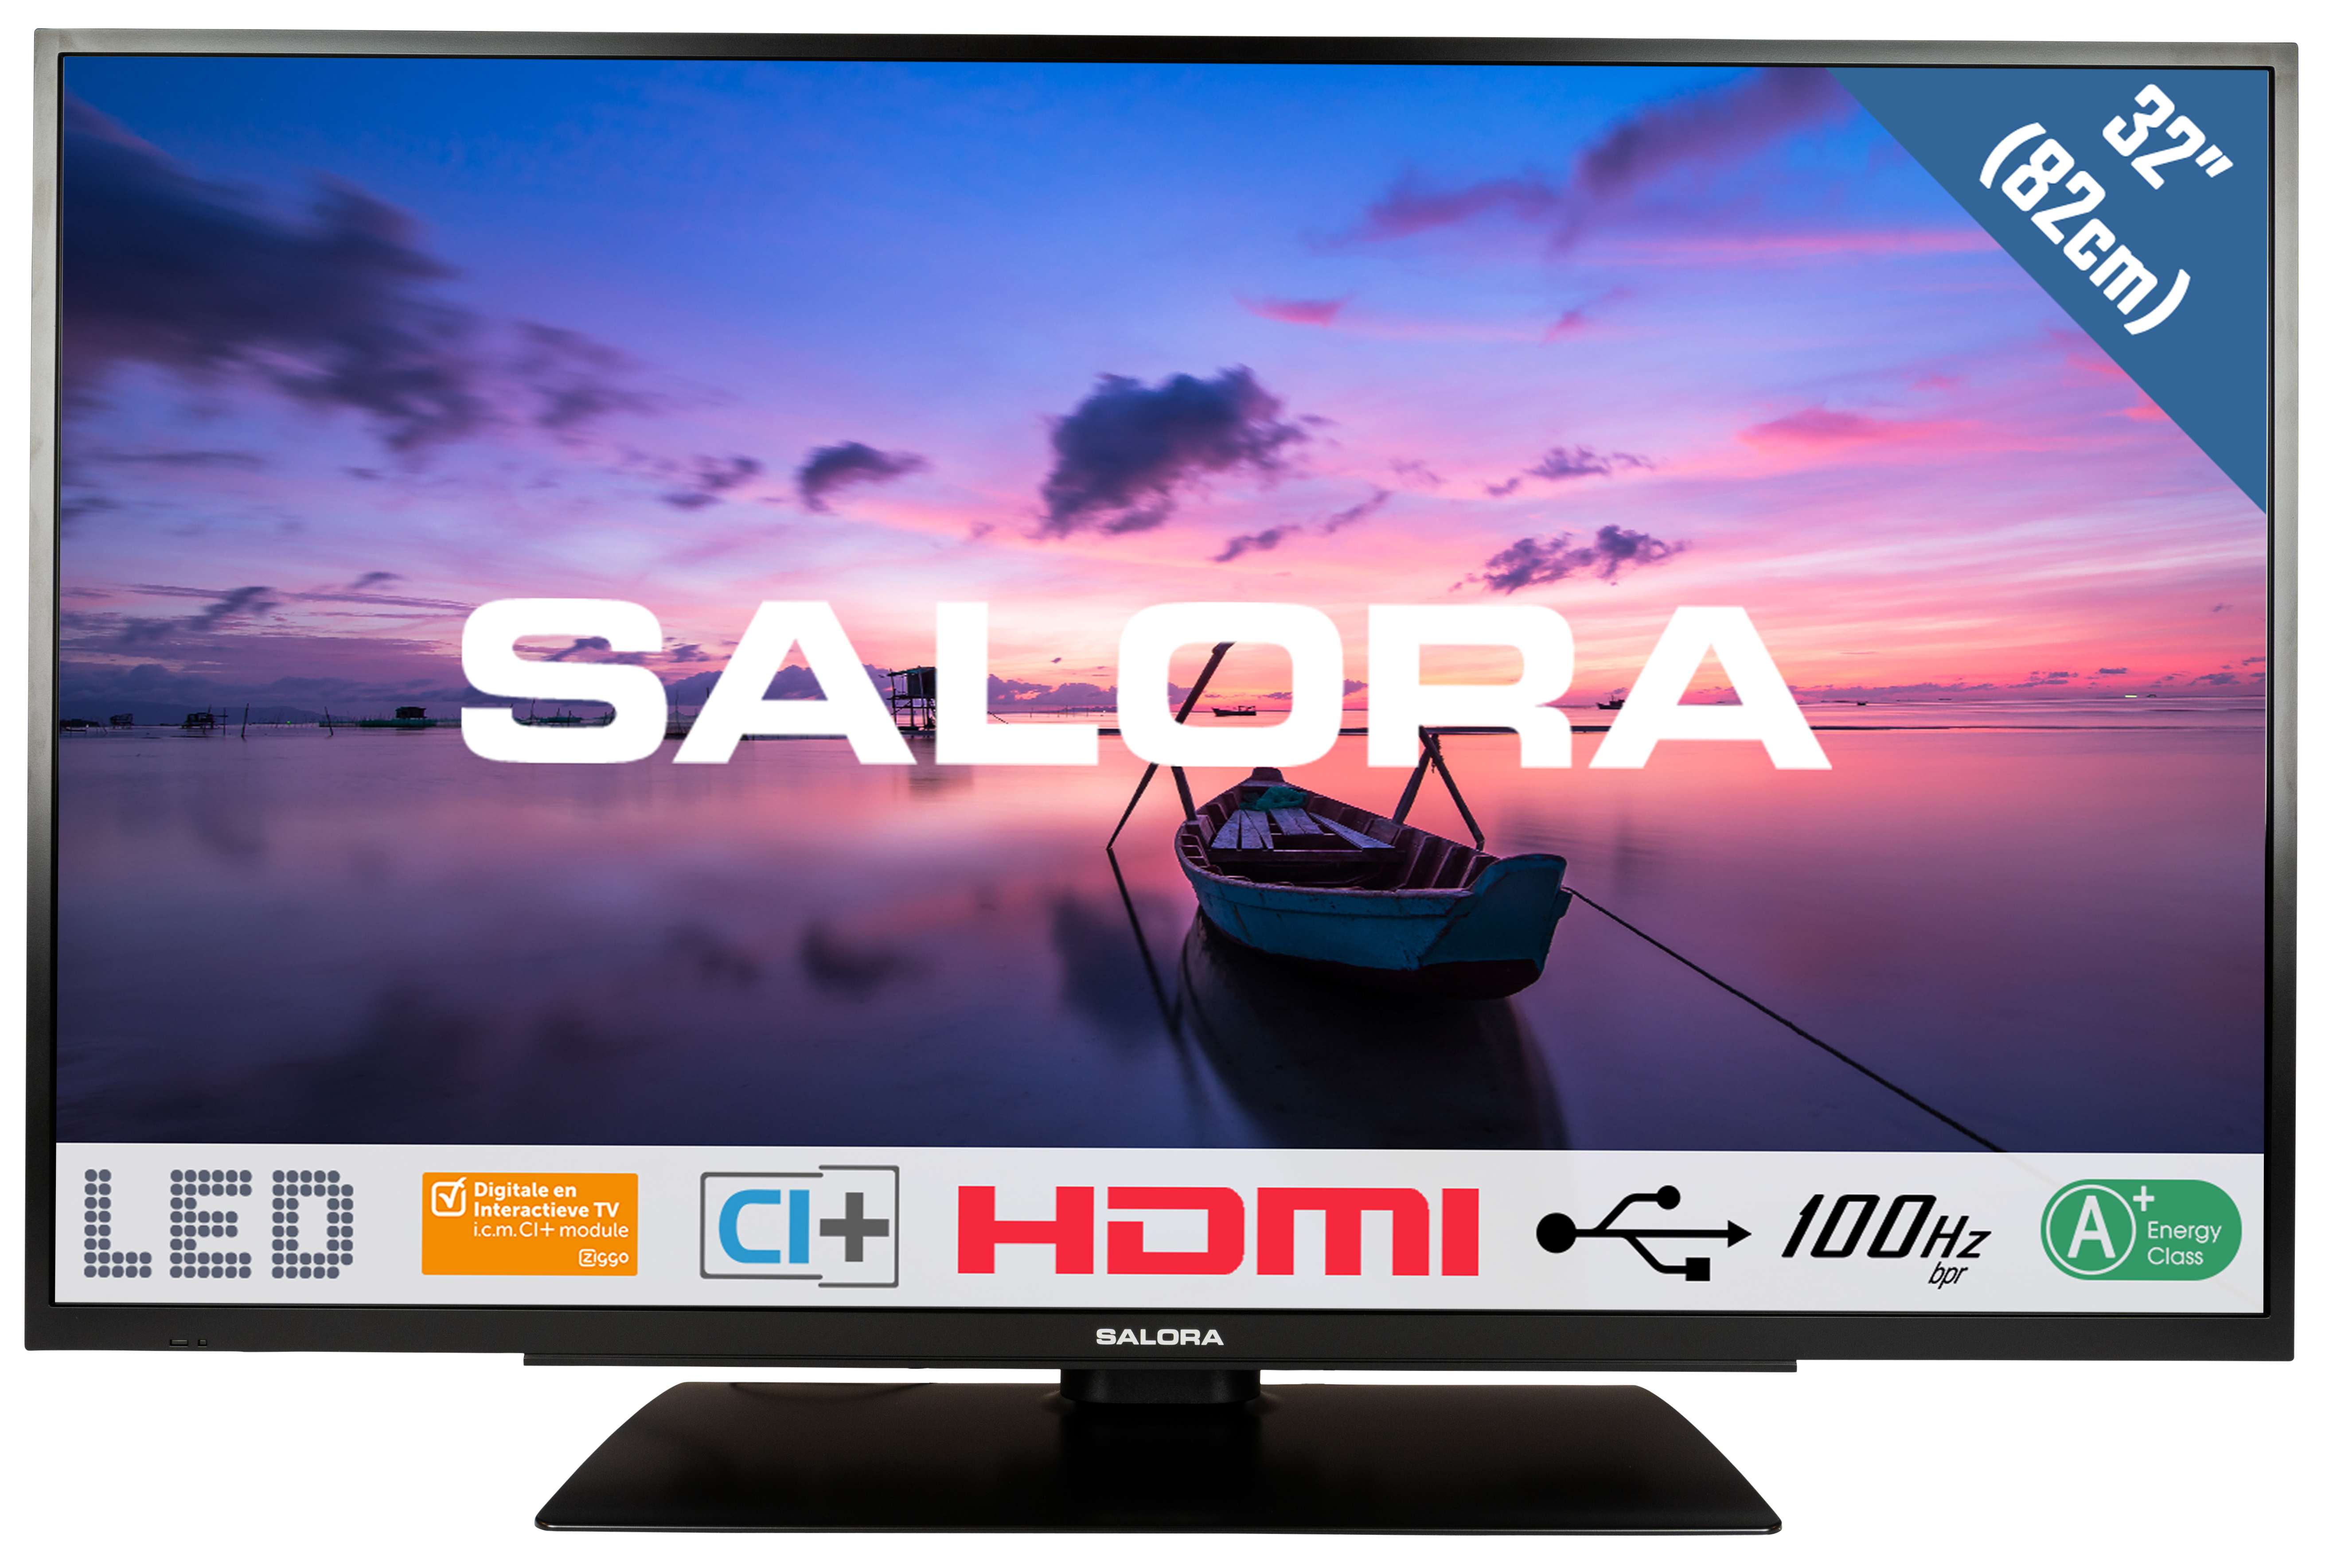 Salora 6500 series 32HLB6500 TV